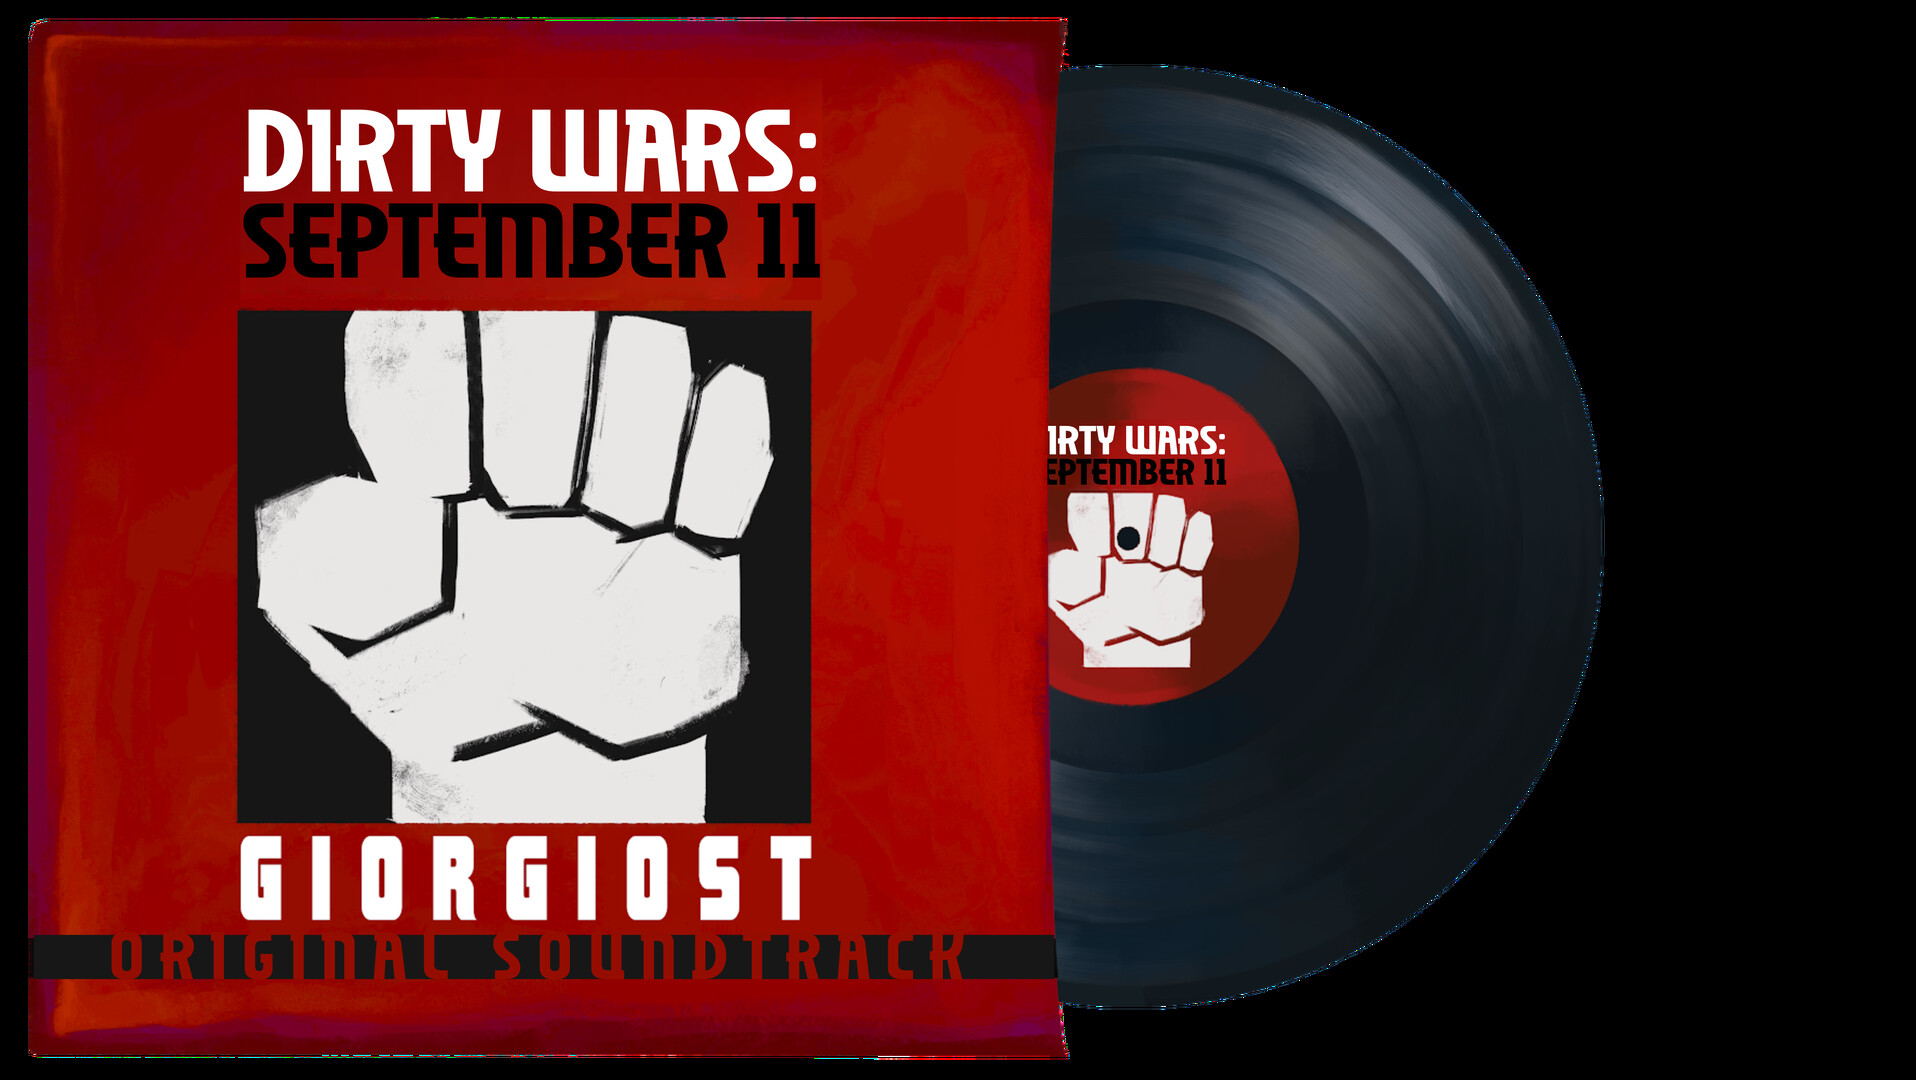 Dirty Wars: September 11 Soundtrack Featured Screenshot #1